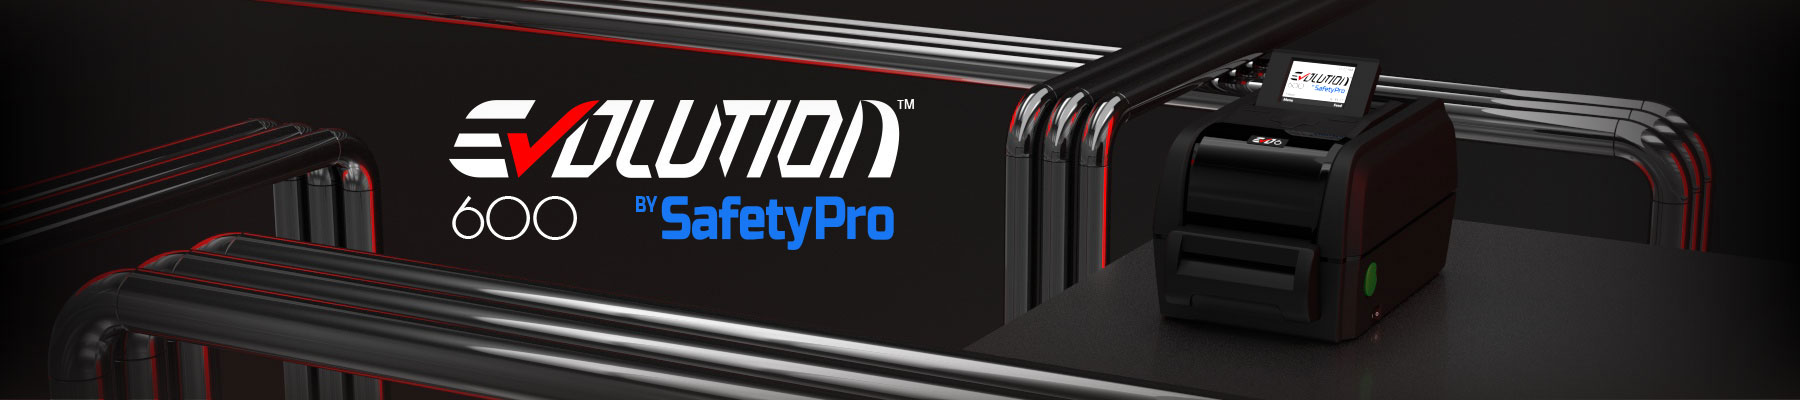 SafetyPro Evolution 600 Labeler high resolution vinyl printer